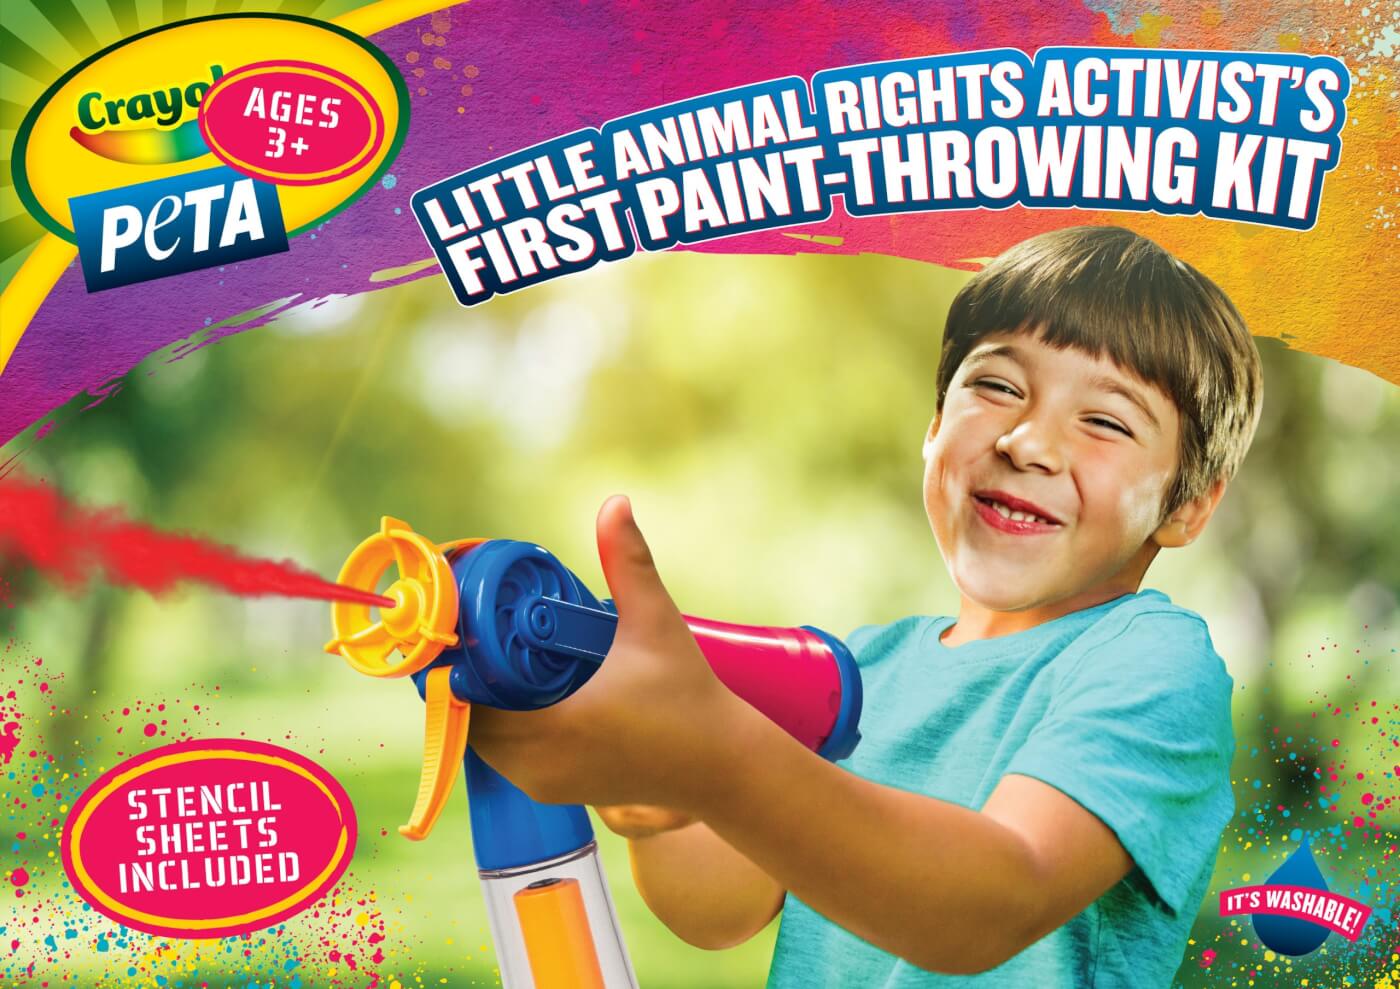 reference Kommunist etik The Little Animal Rights Activist's First Paint-Throwing Kit | PETA